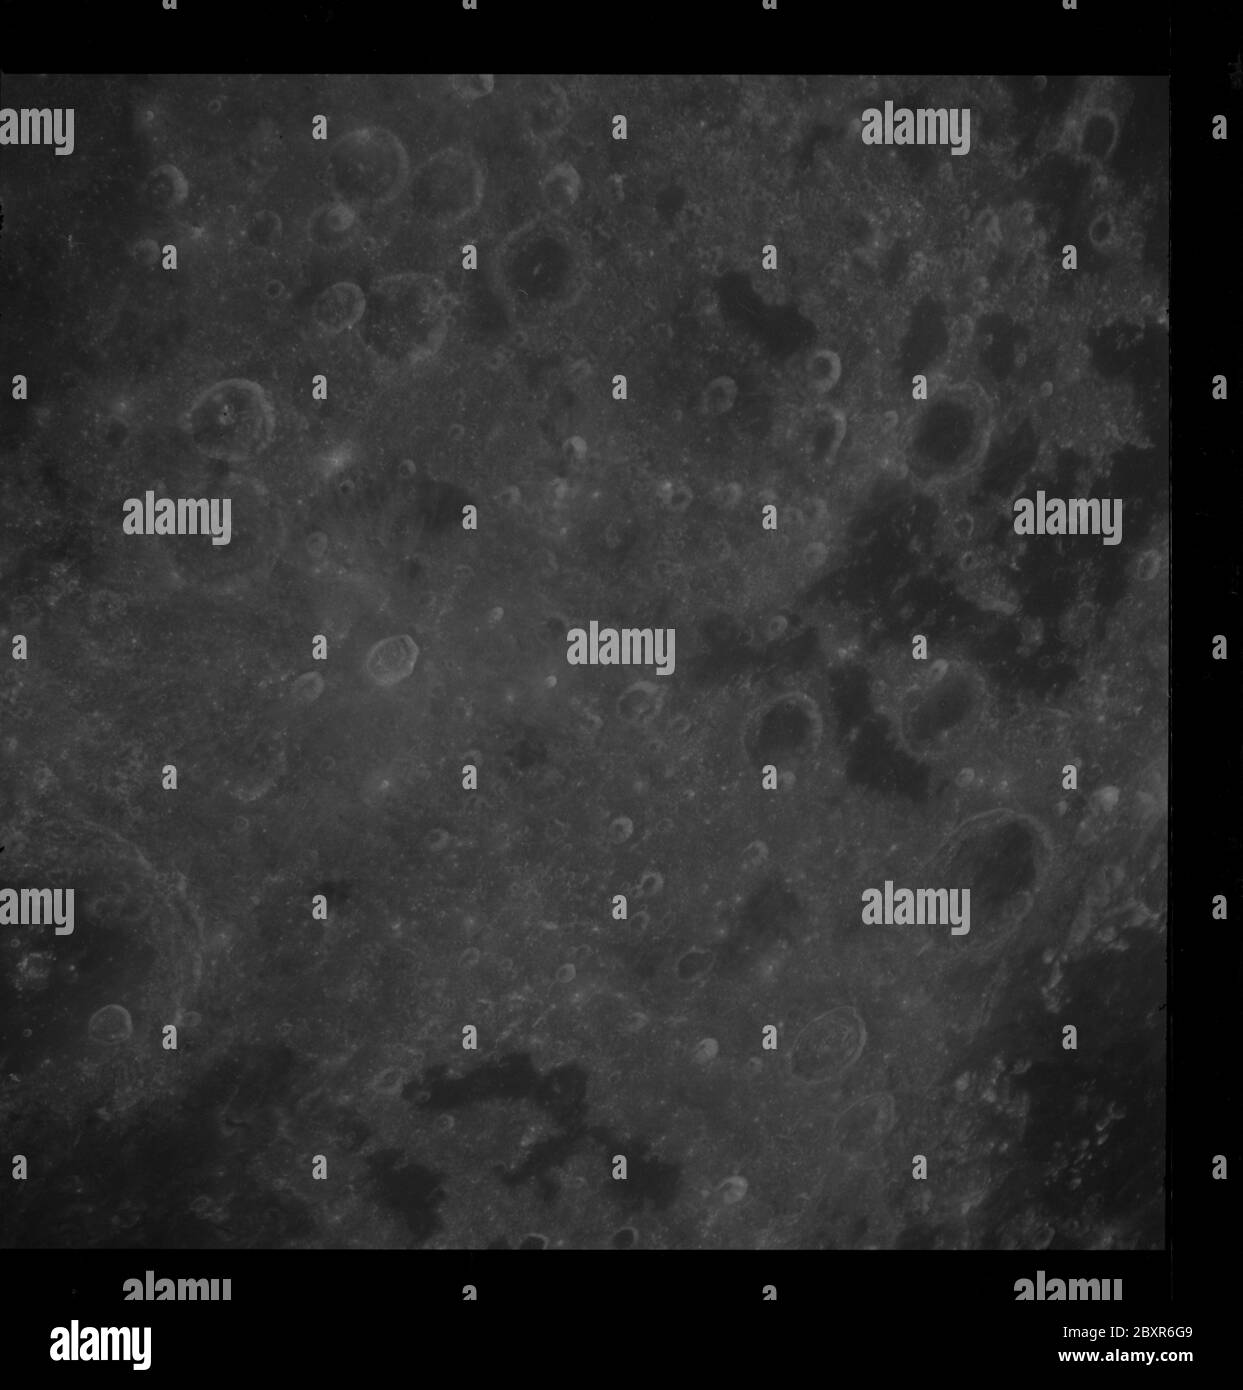 AS08-12-2206 - Apollo 8 - Apollo 8 Mission image, Sea of Waves, Mare Undarum, T/O 66, 59, 67; Scope and content:  The original database describes this as: Description: Apollo 8,Moon, Sea of Waves, Mare Undarum. Target of Opportunity (T/O) 66 East of Mare Crisium rim,fill-in for poor Lunar Obiter 4 (LO IV) photos, T/O 59 Mare Symthii,ring craters,T/O 67 South of Mare Crisium rim,fill-in for poor LO IV photos. Image taken on Revolution 10 during Transearth Injection (TEI). Latitude 7 North,Longitude 74 East. Camera Tilt Mode: Near Vertical. Direction: North. Sun Angle: 43. Original Film Magazine Stock Photo